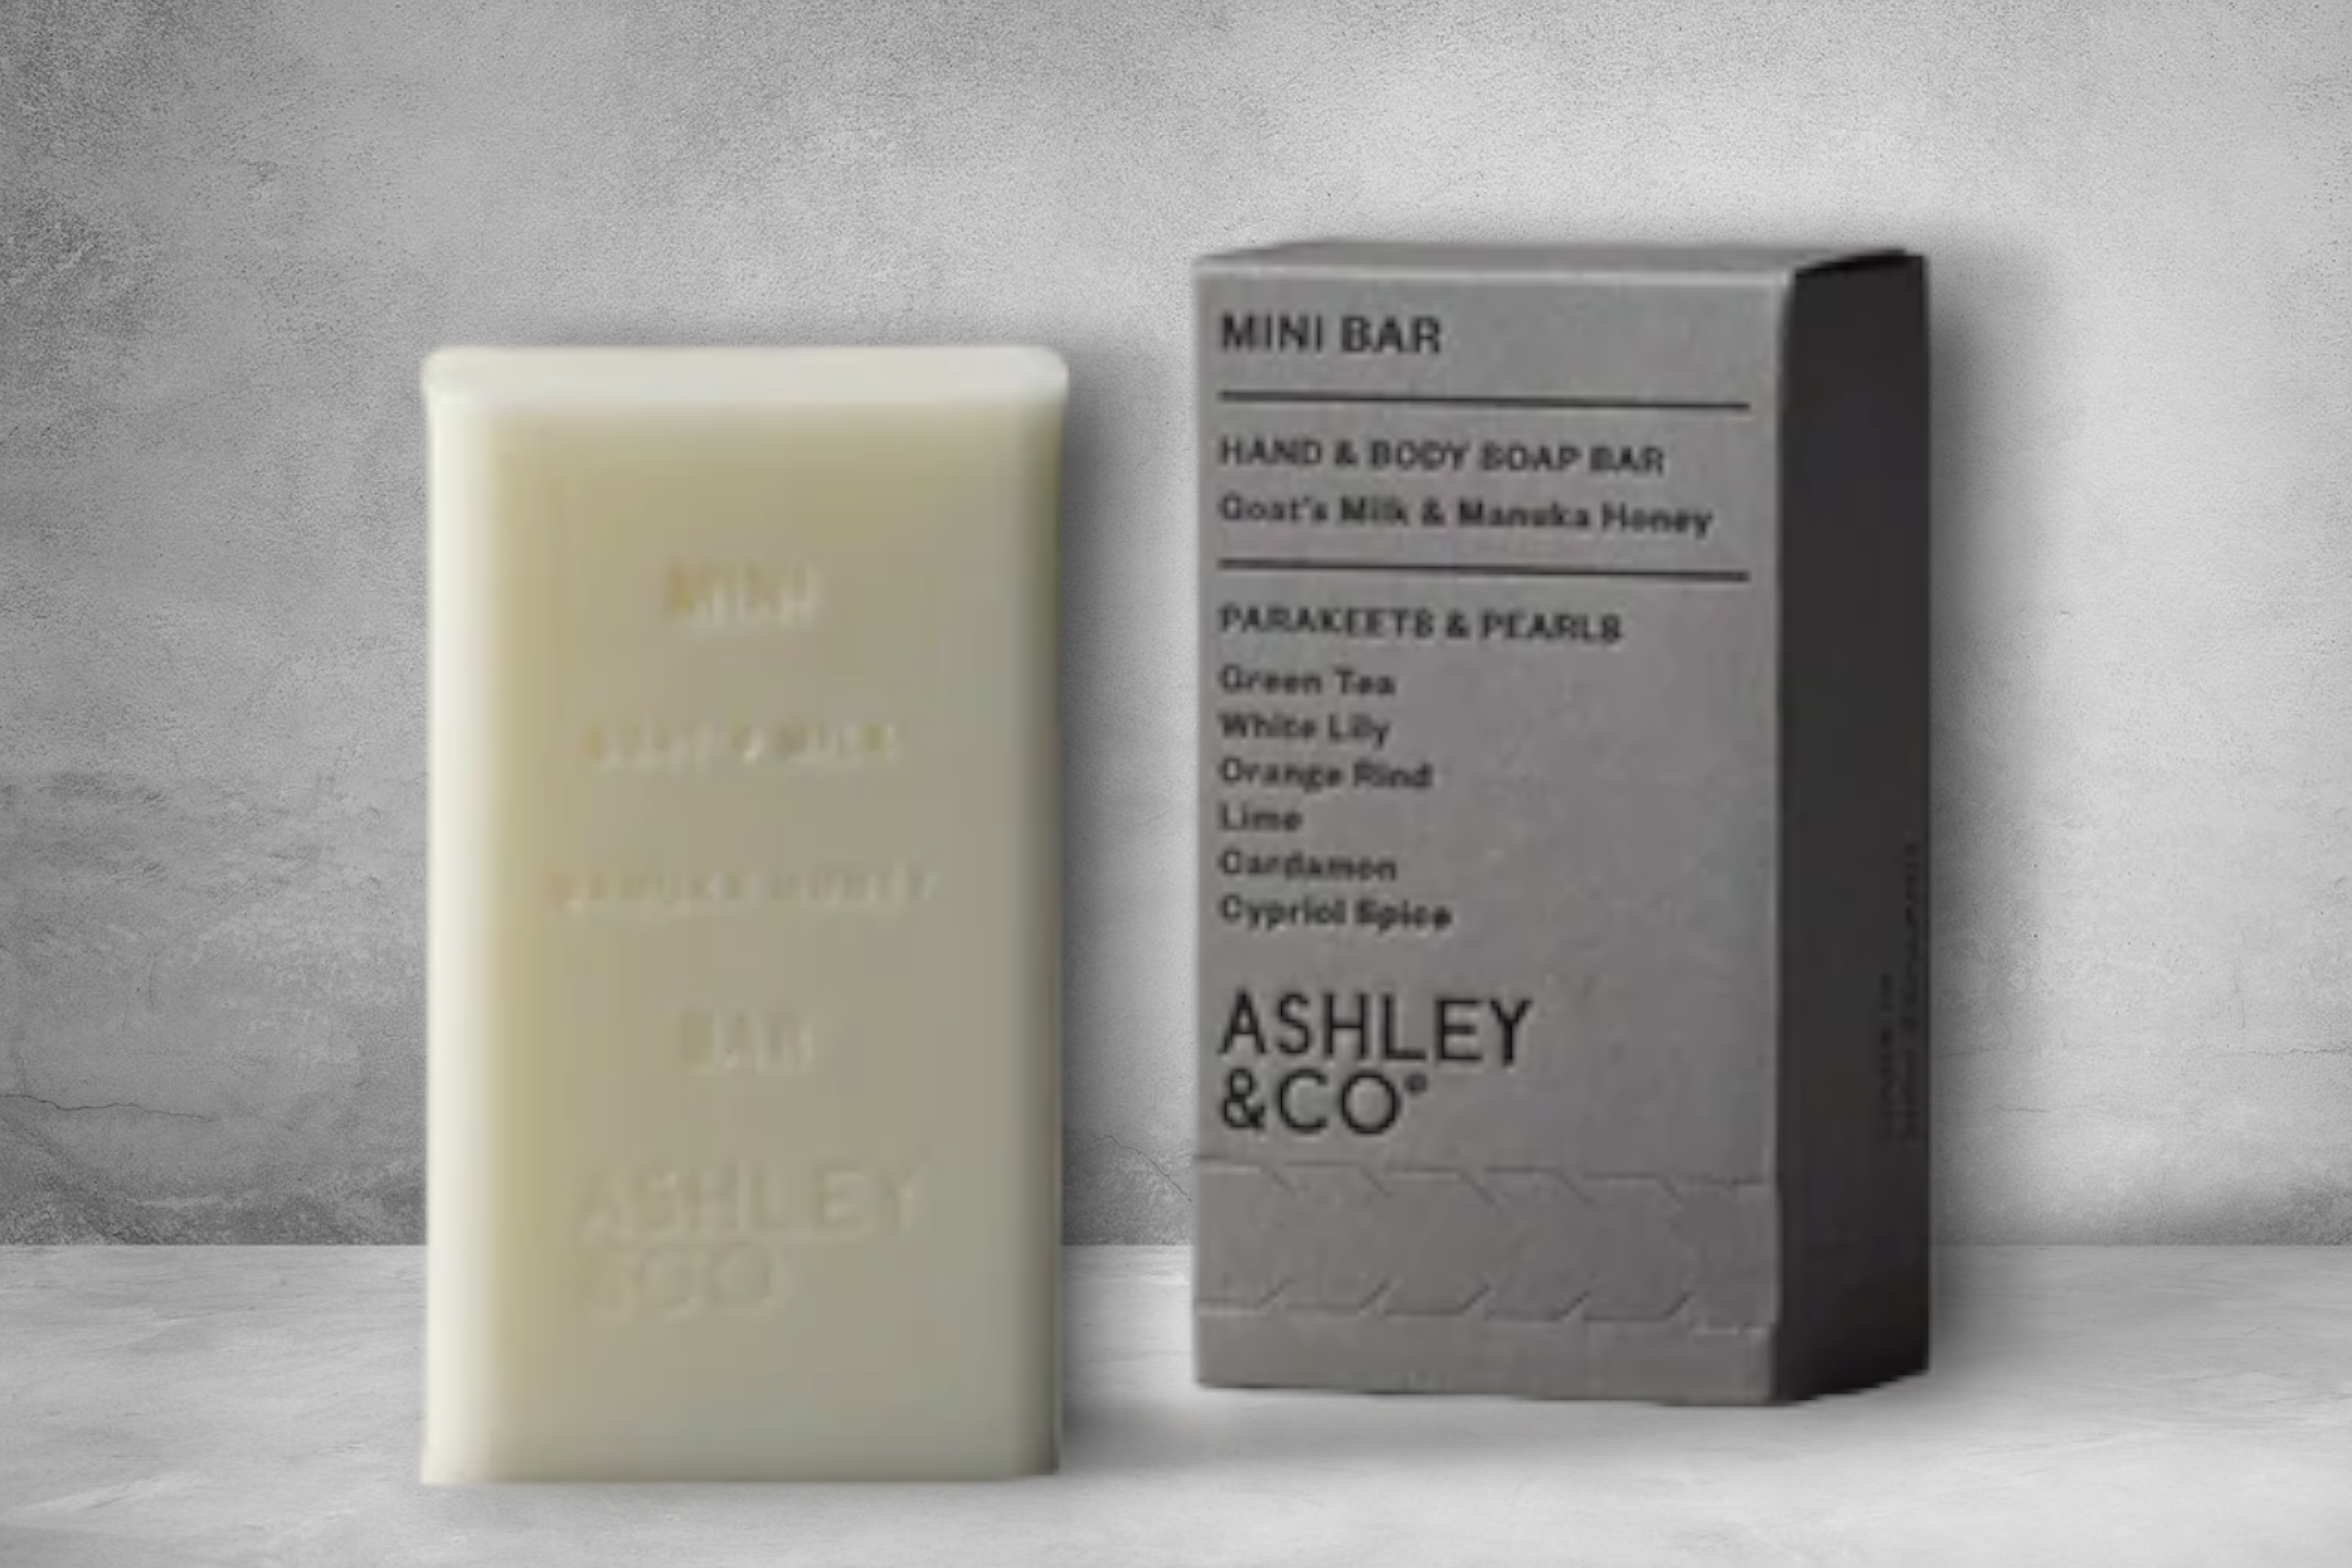 Ashley & Co parakeets & pearls mini bar soap